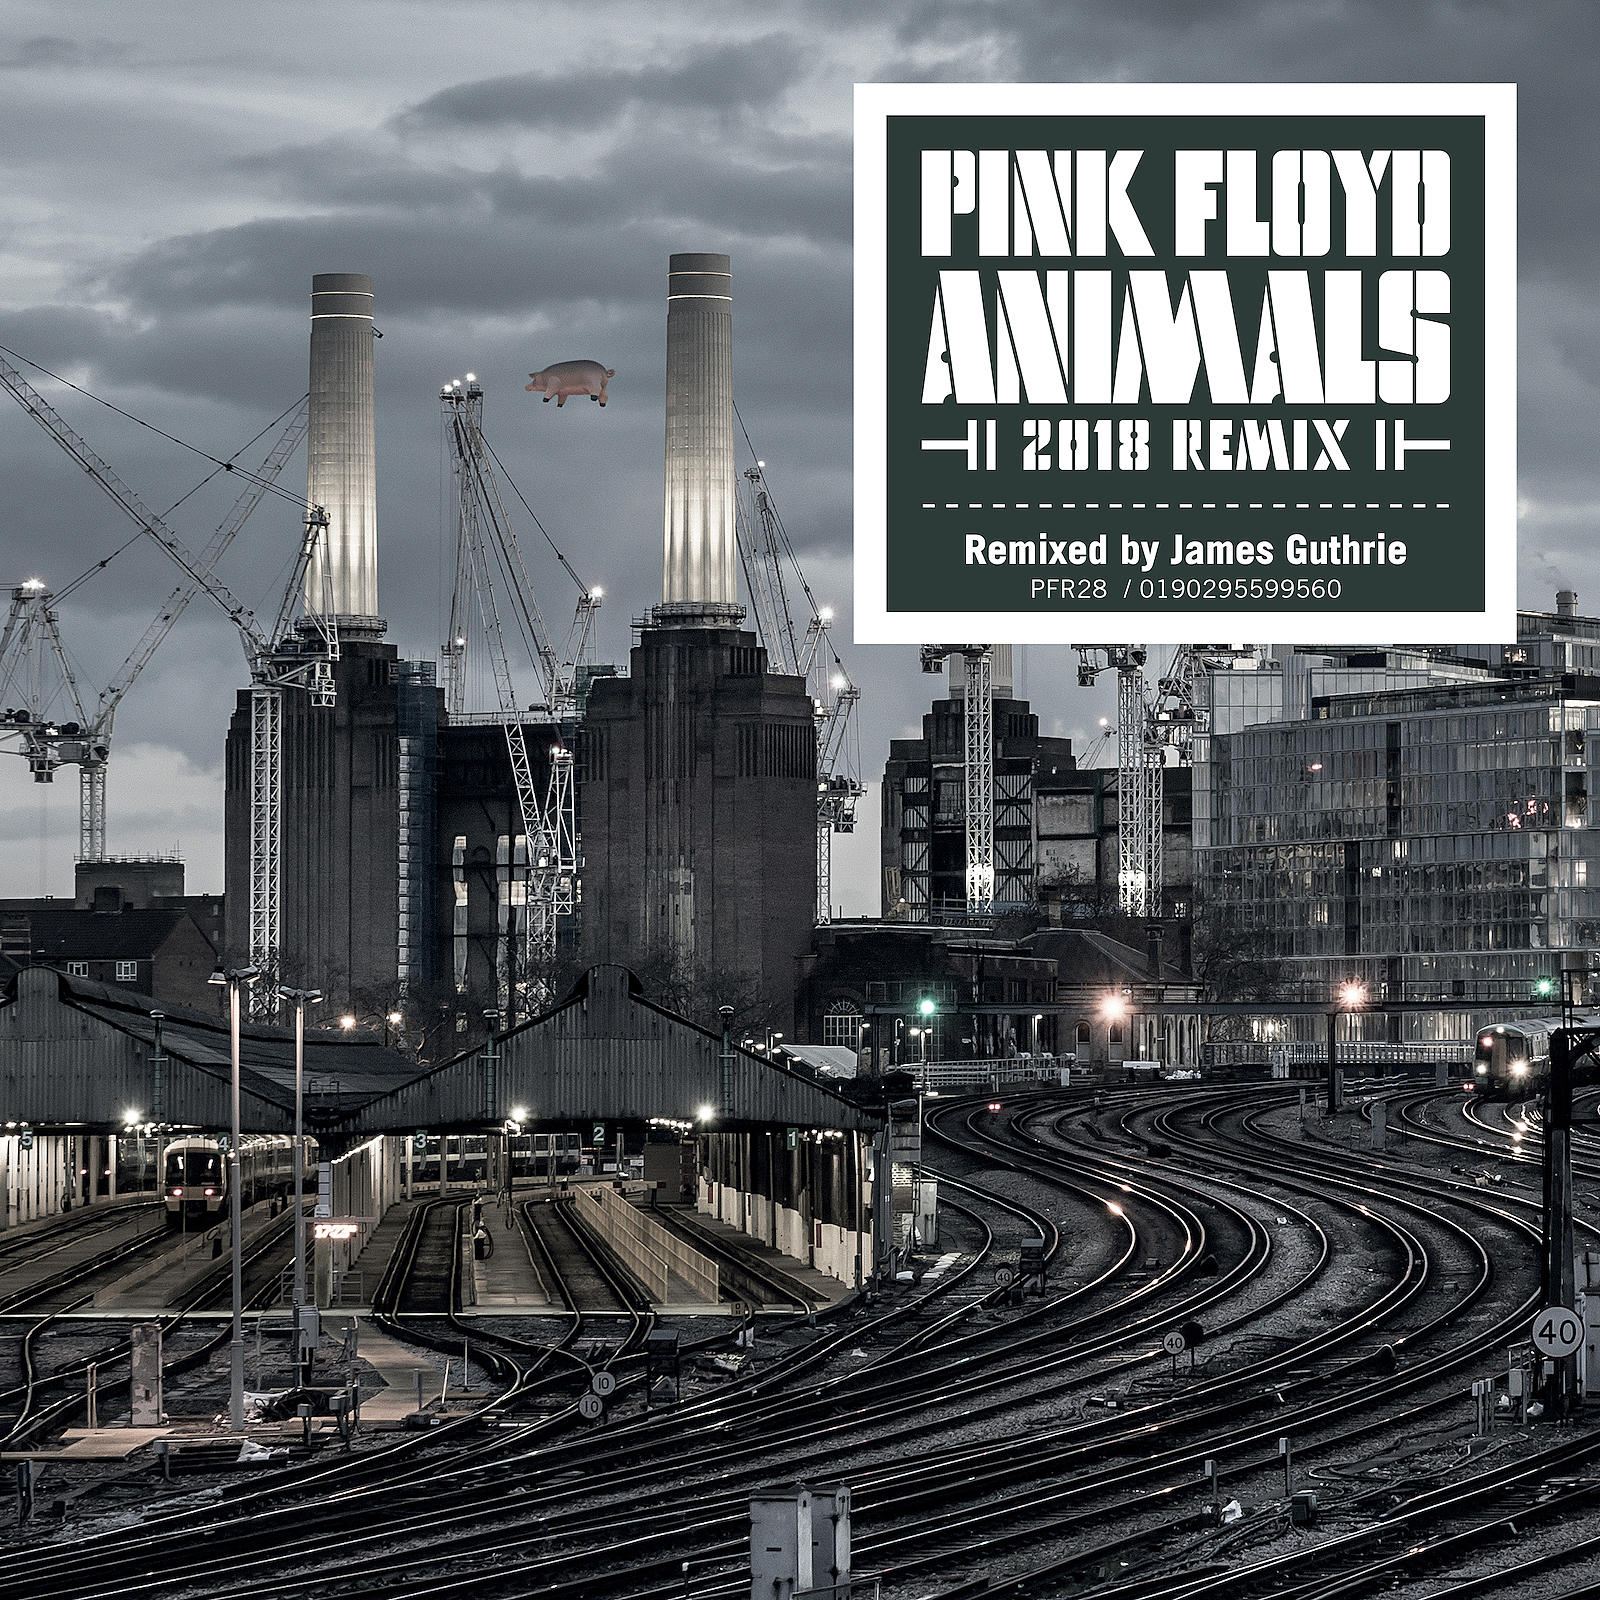 PinkFloyd_Animals2018Remix_OnlineDigital_Cover_Warner